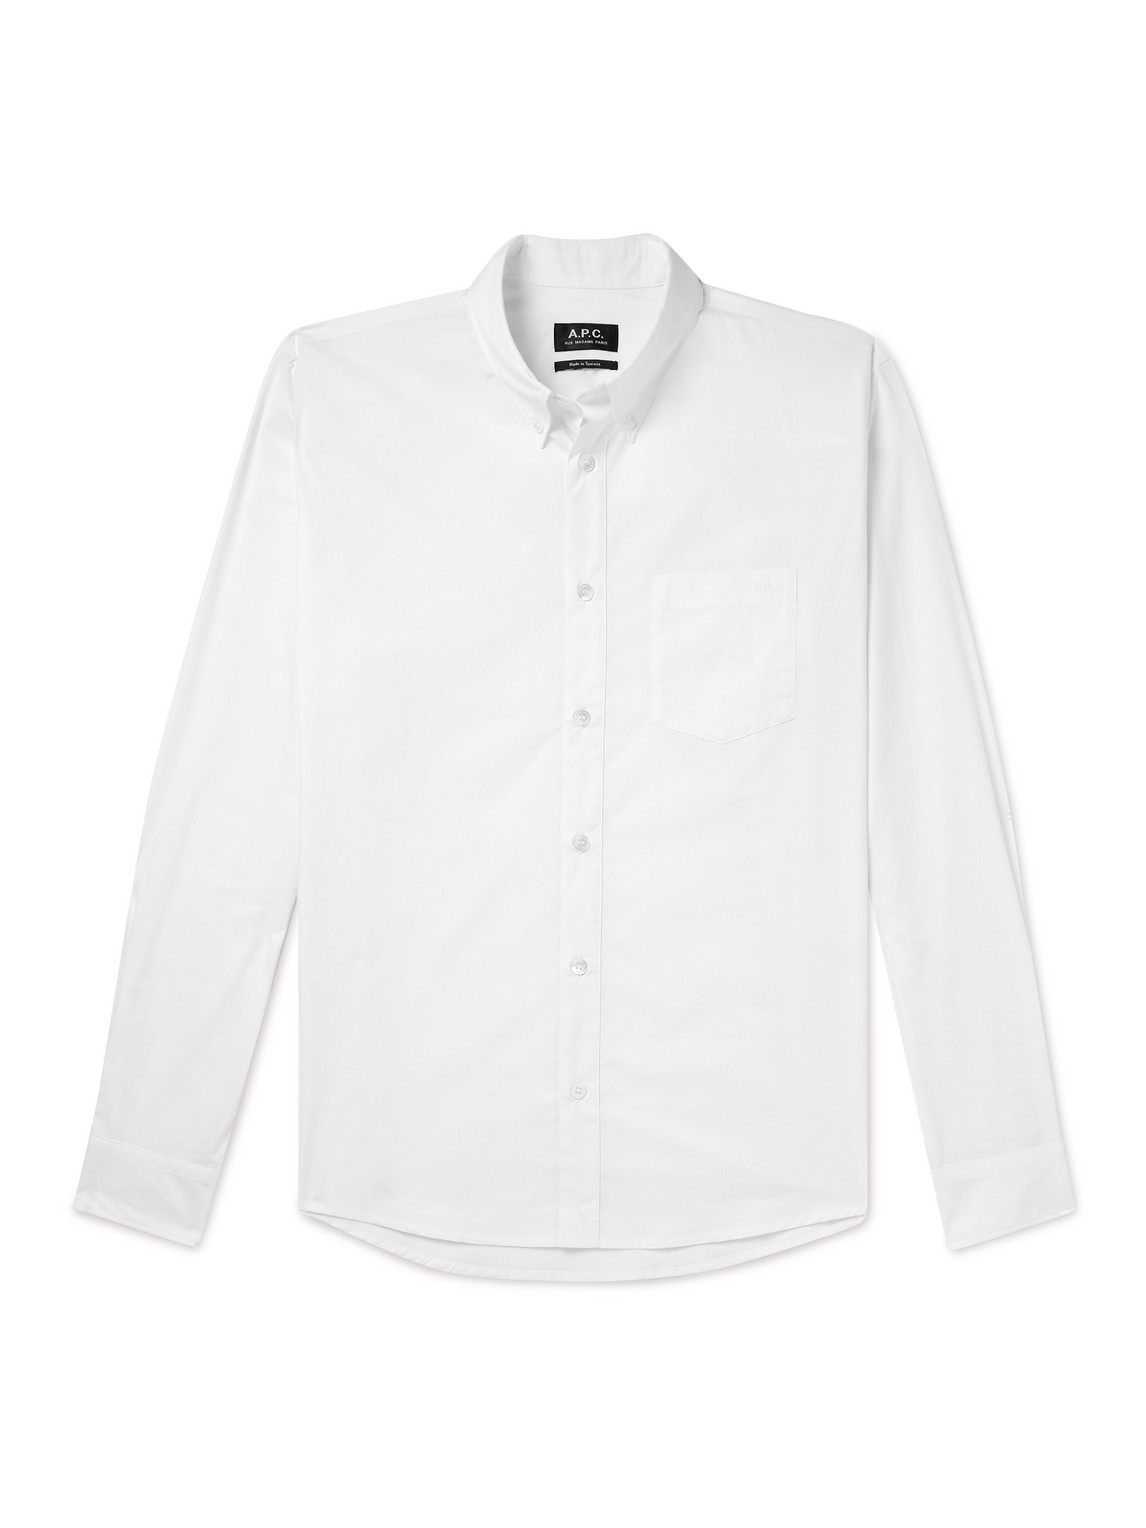 A.P.C. - Edouard Button-Down Collar Cotton Shirt - Men - White - M von A.P.C.